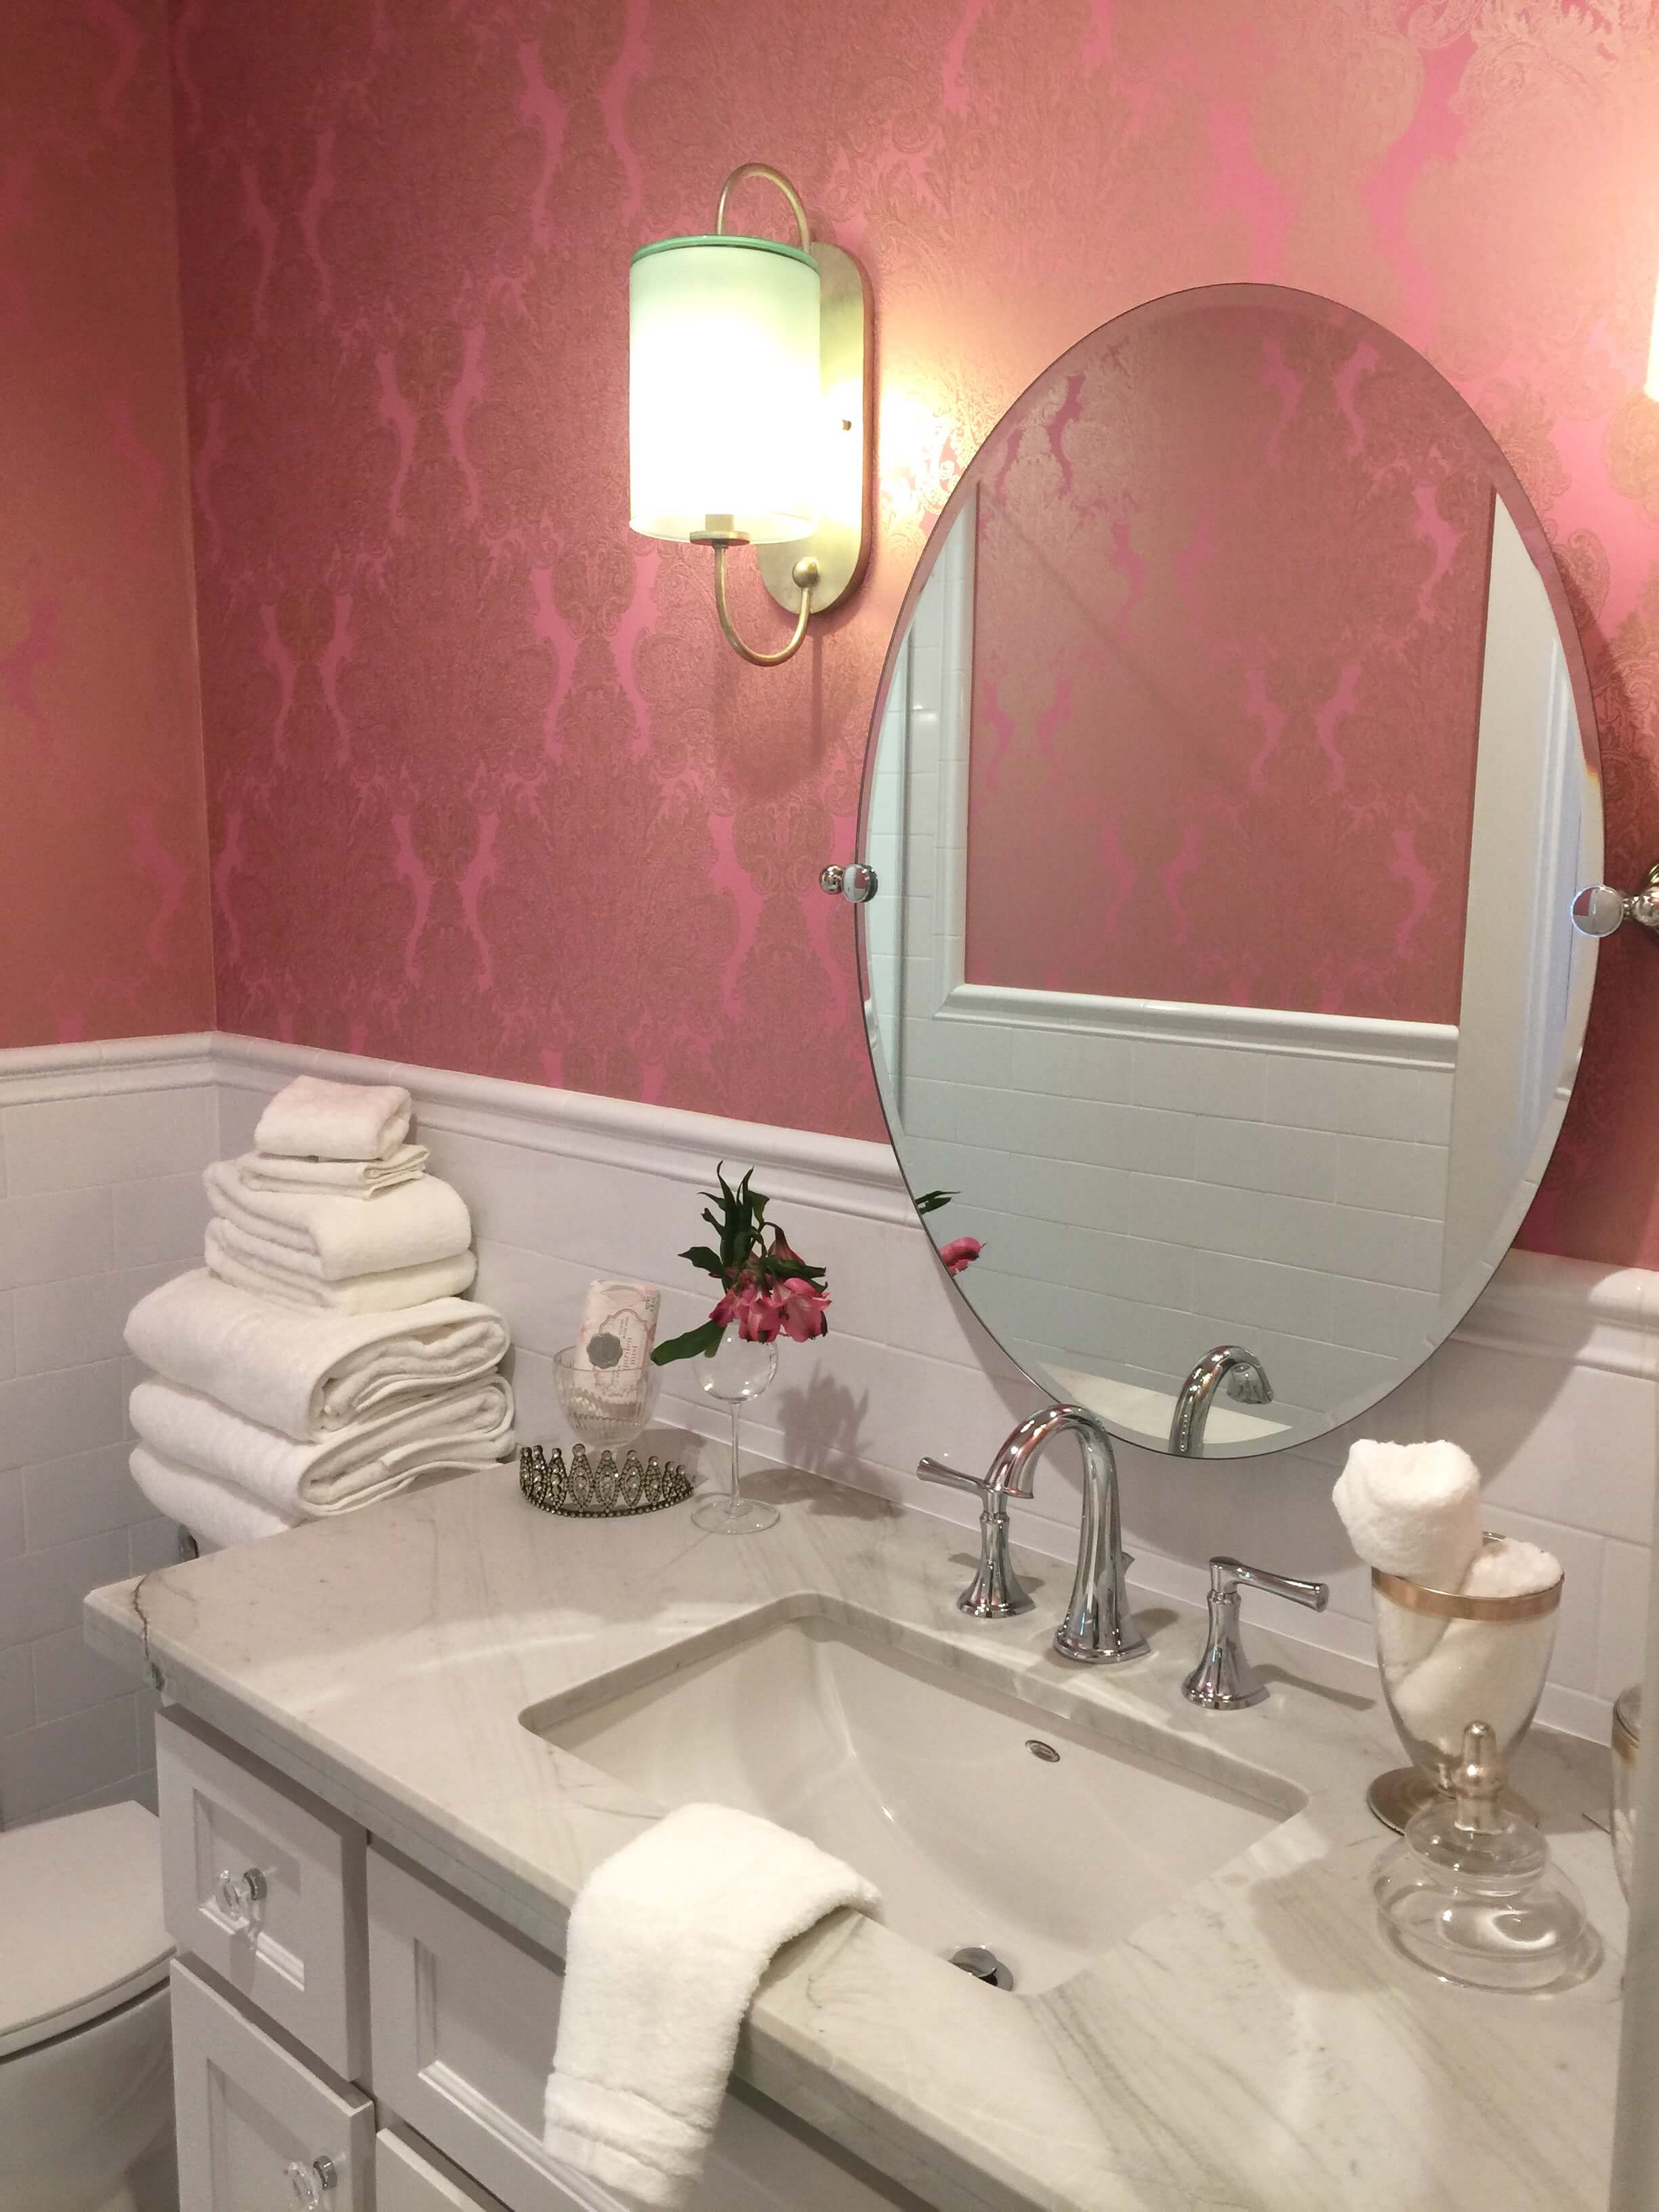 https://images.squarespace-cdn.com/content/v1/4fcf5c8684aef9ce6e0a44b0/1533823507427-Y9UD7XRTXVIFLN5HNKNY/pink+bath+wallpaper+with+bath+accessories